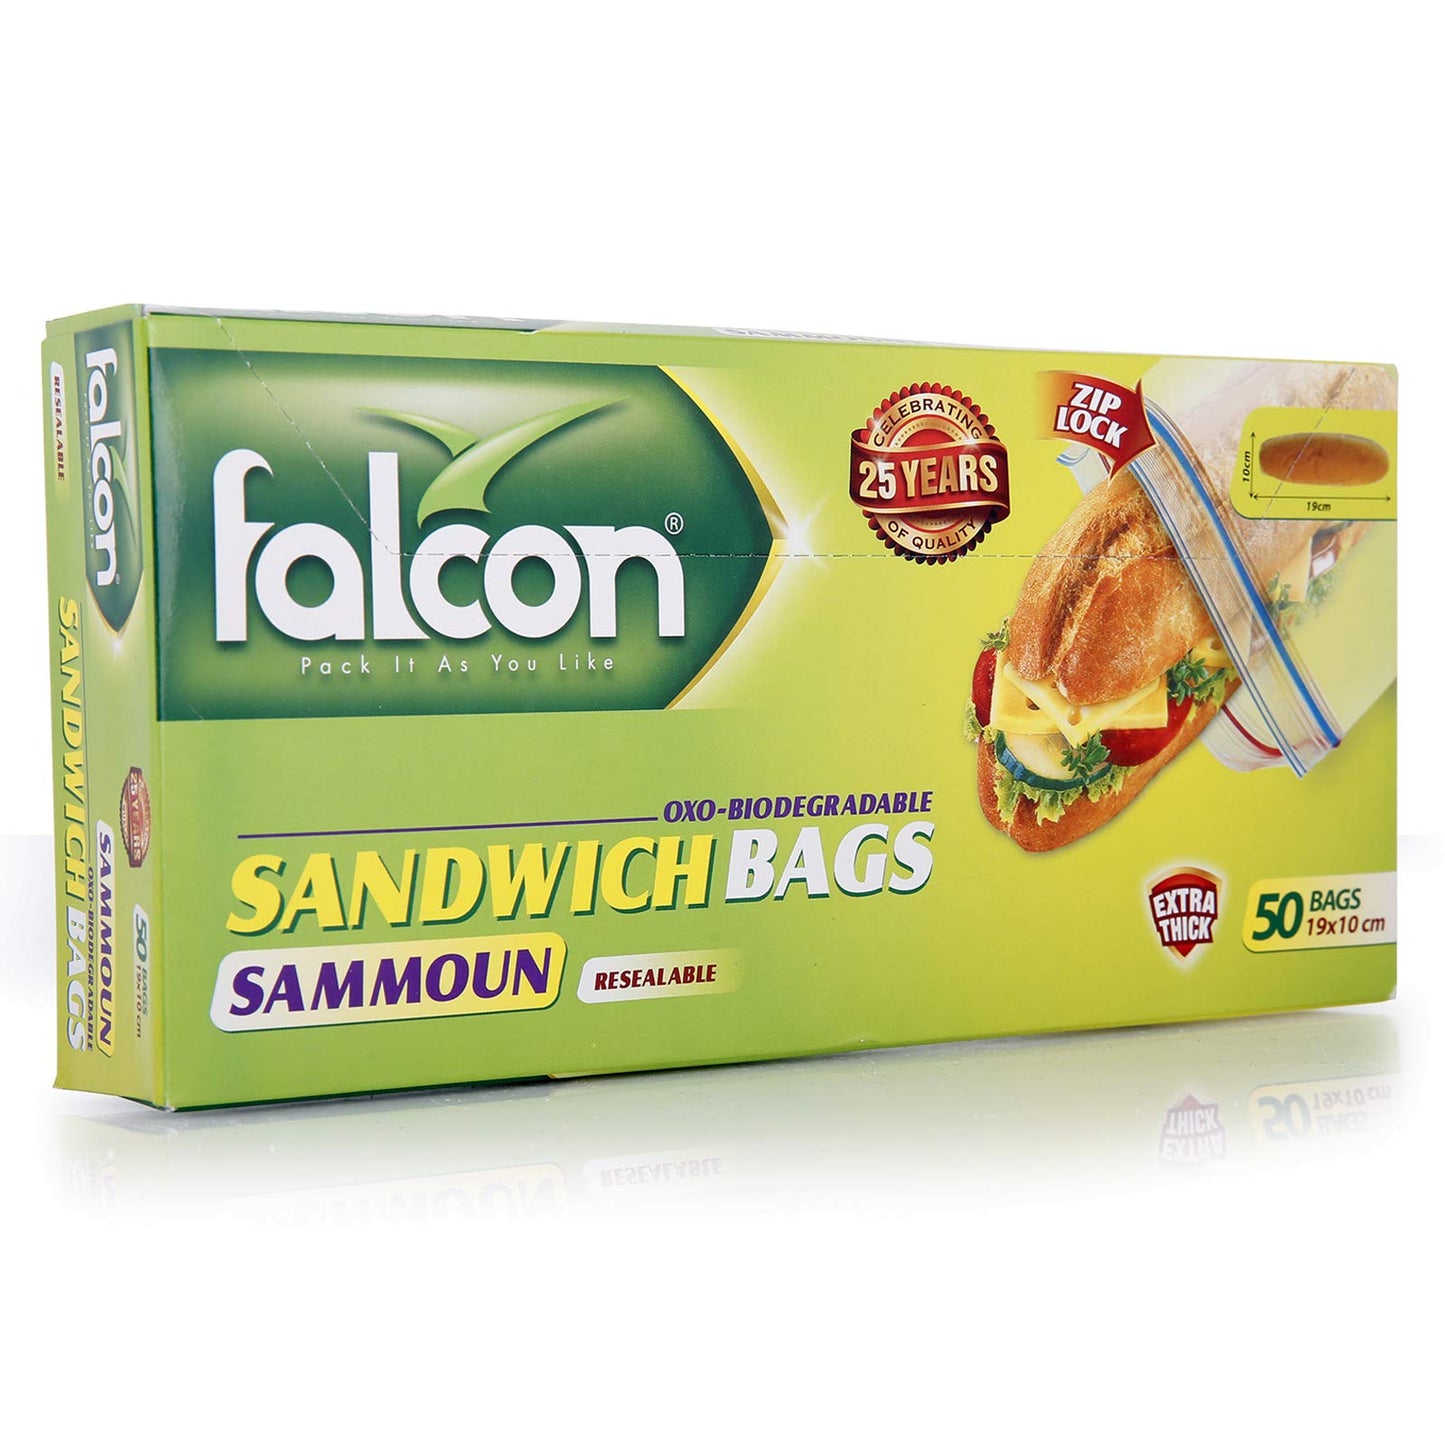 Sammoun Resealable Oxo- Biodegradable Sandwich Bags, Clear, 19 x 10 cm, TPLPB012, Pack of 50